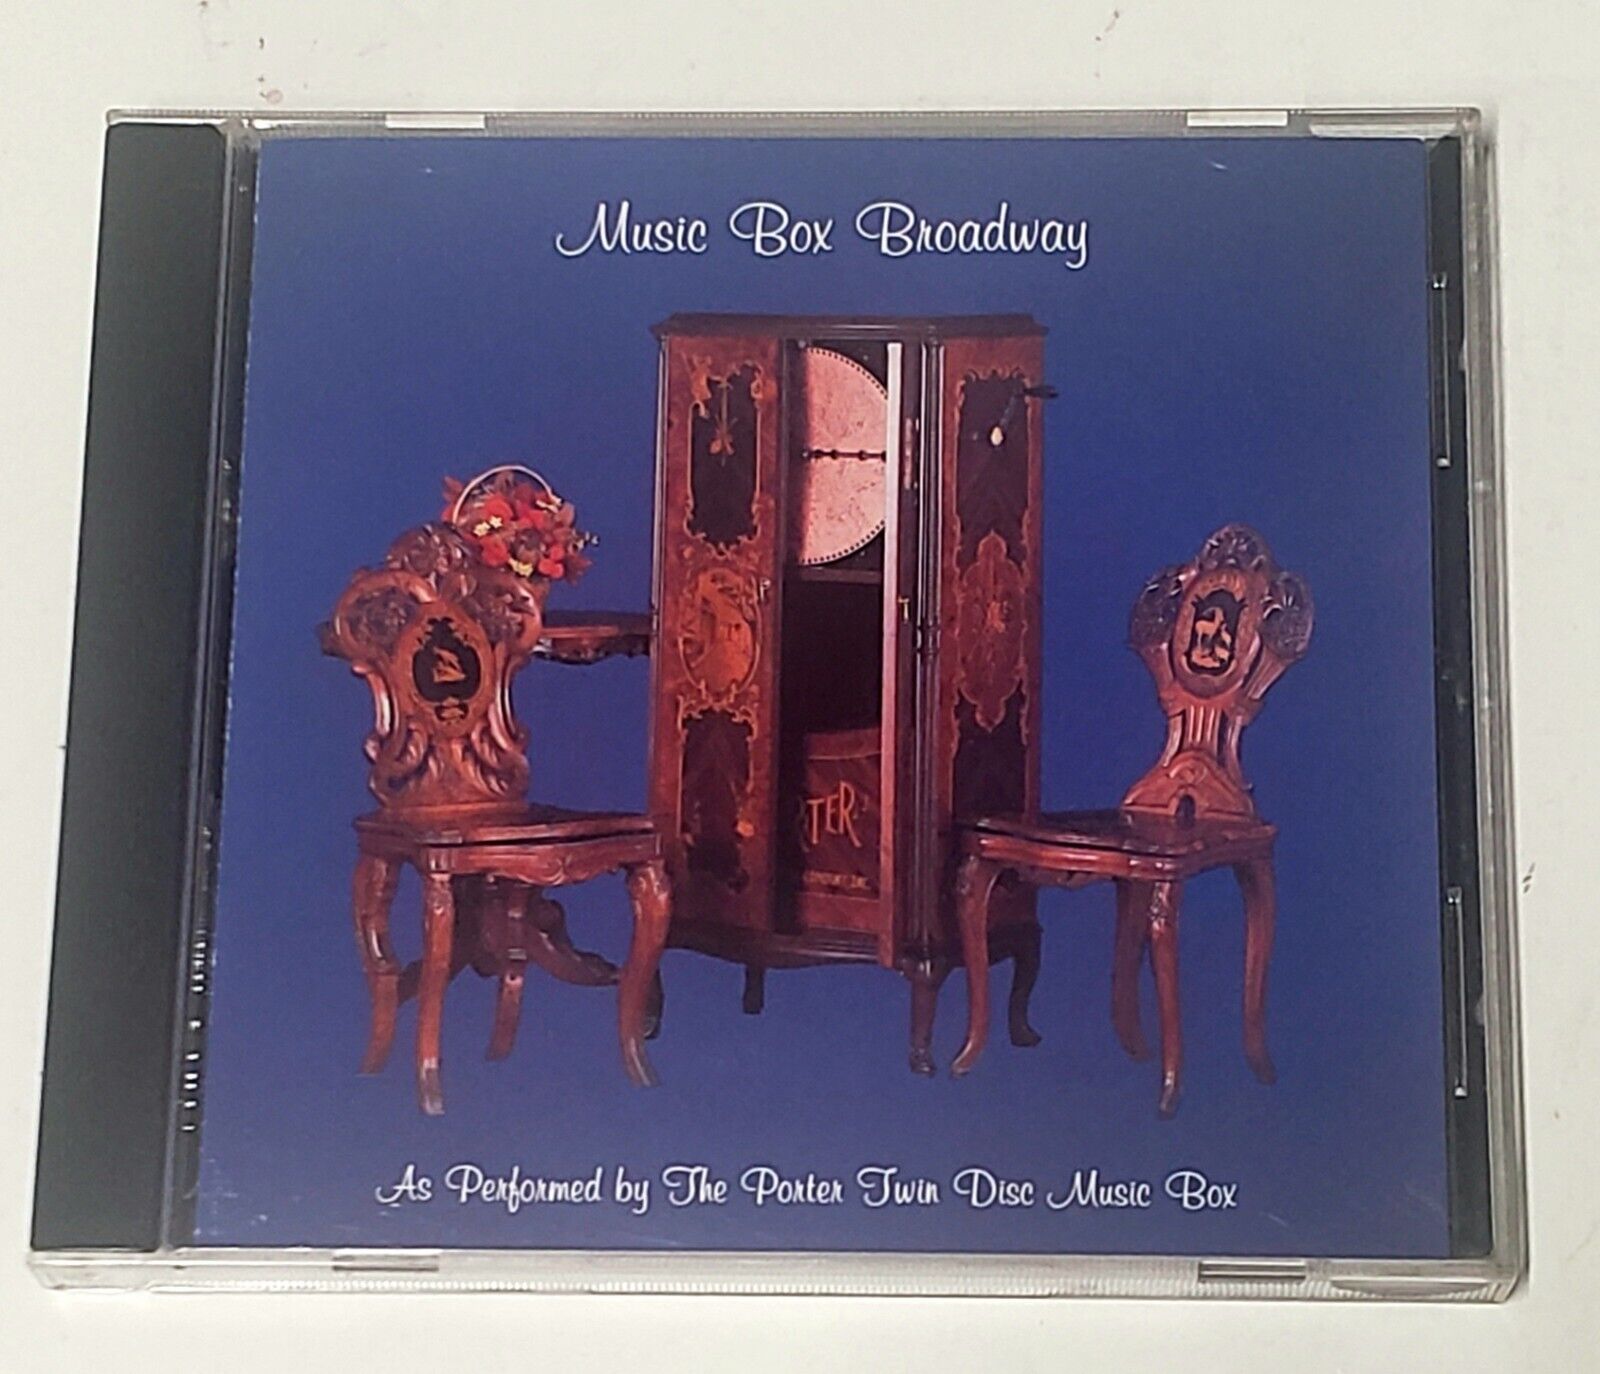 PORTER TWIN DISC MUSIC BOX - Music Box Broadway - CD